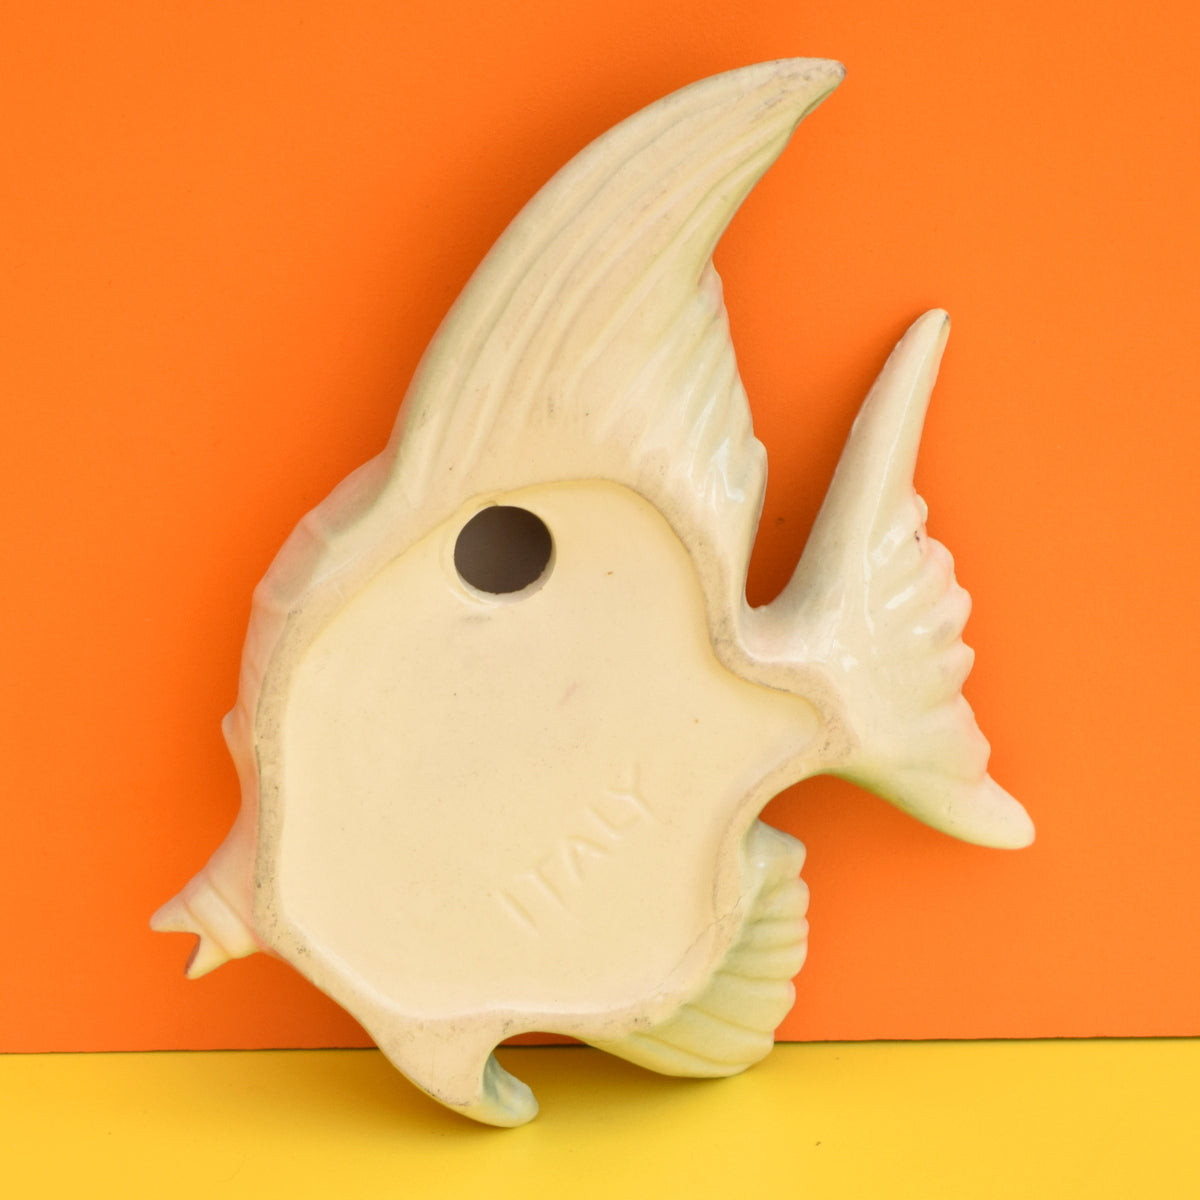 Vintage 1950s Kitsch Ceramic Fish Wall Decoration - Italy